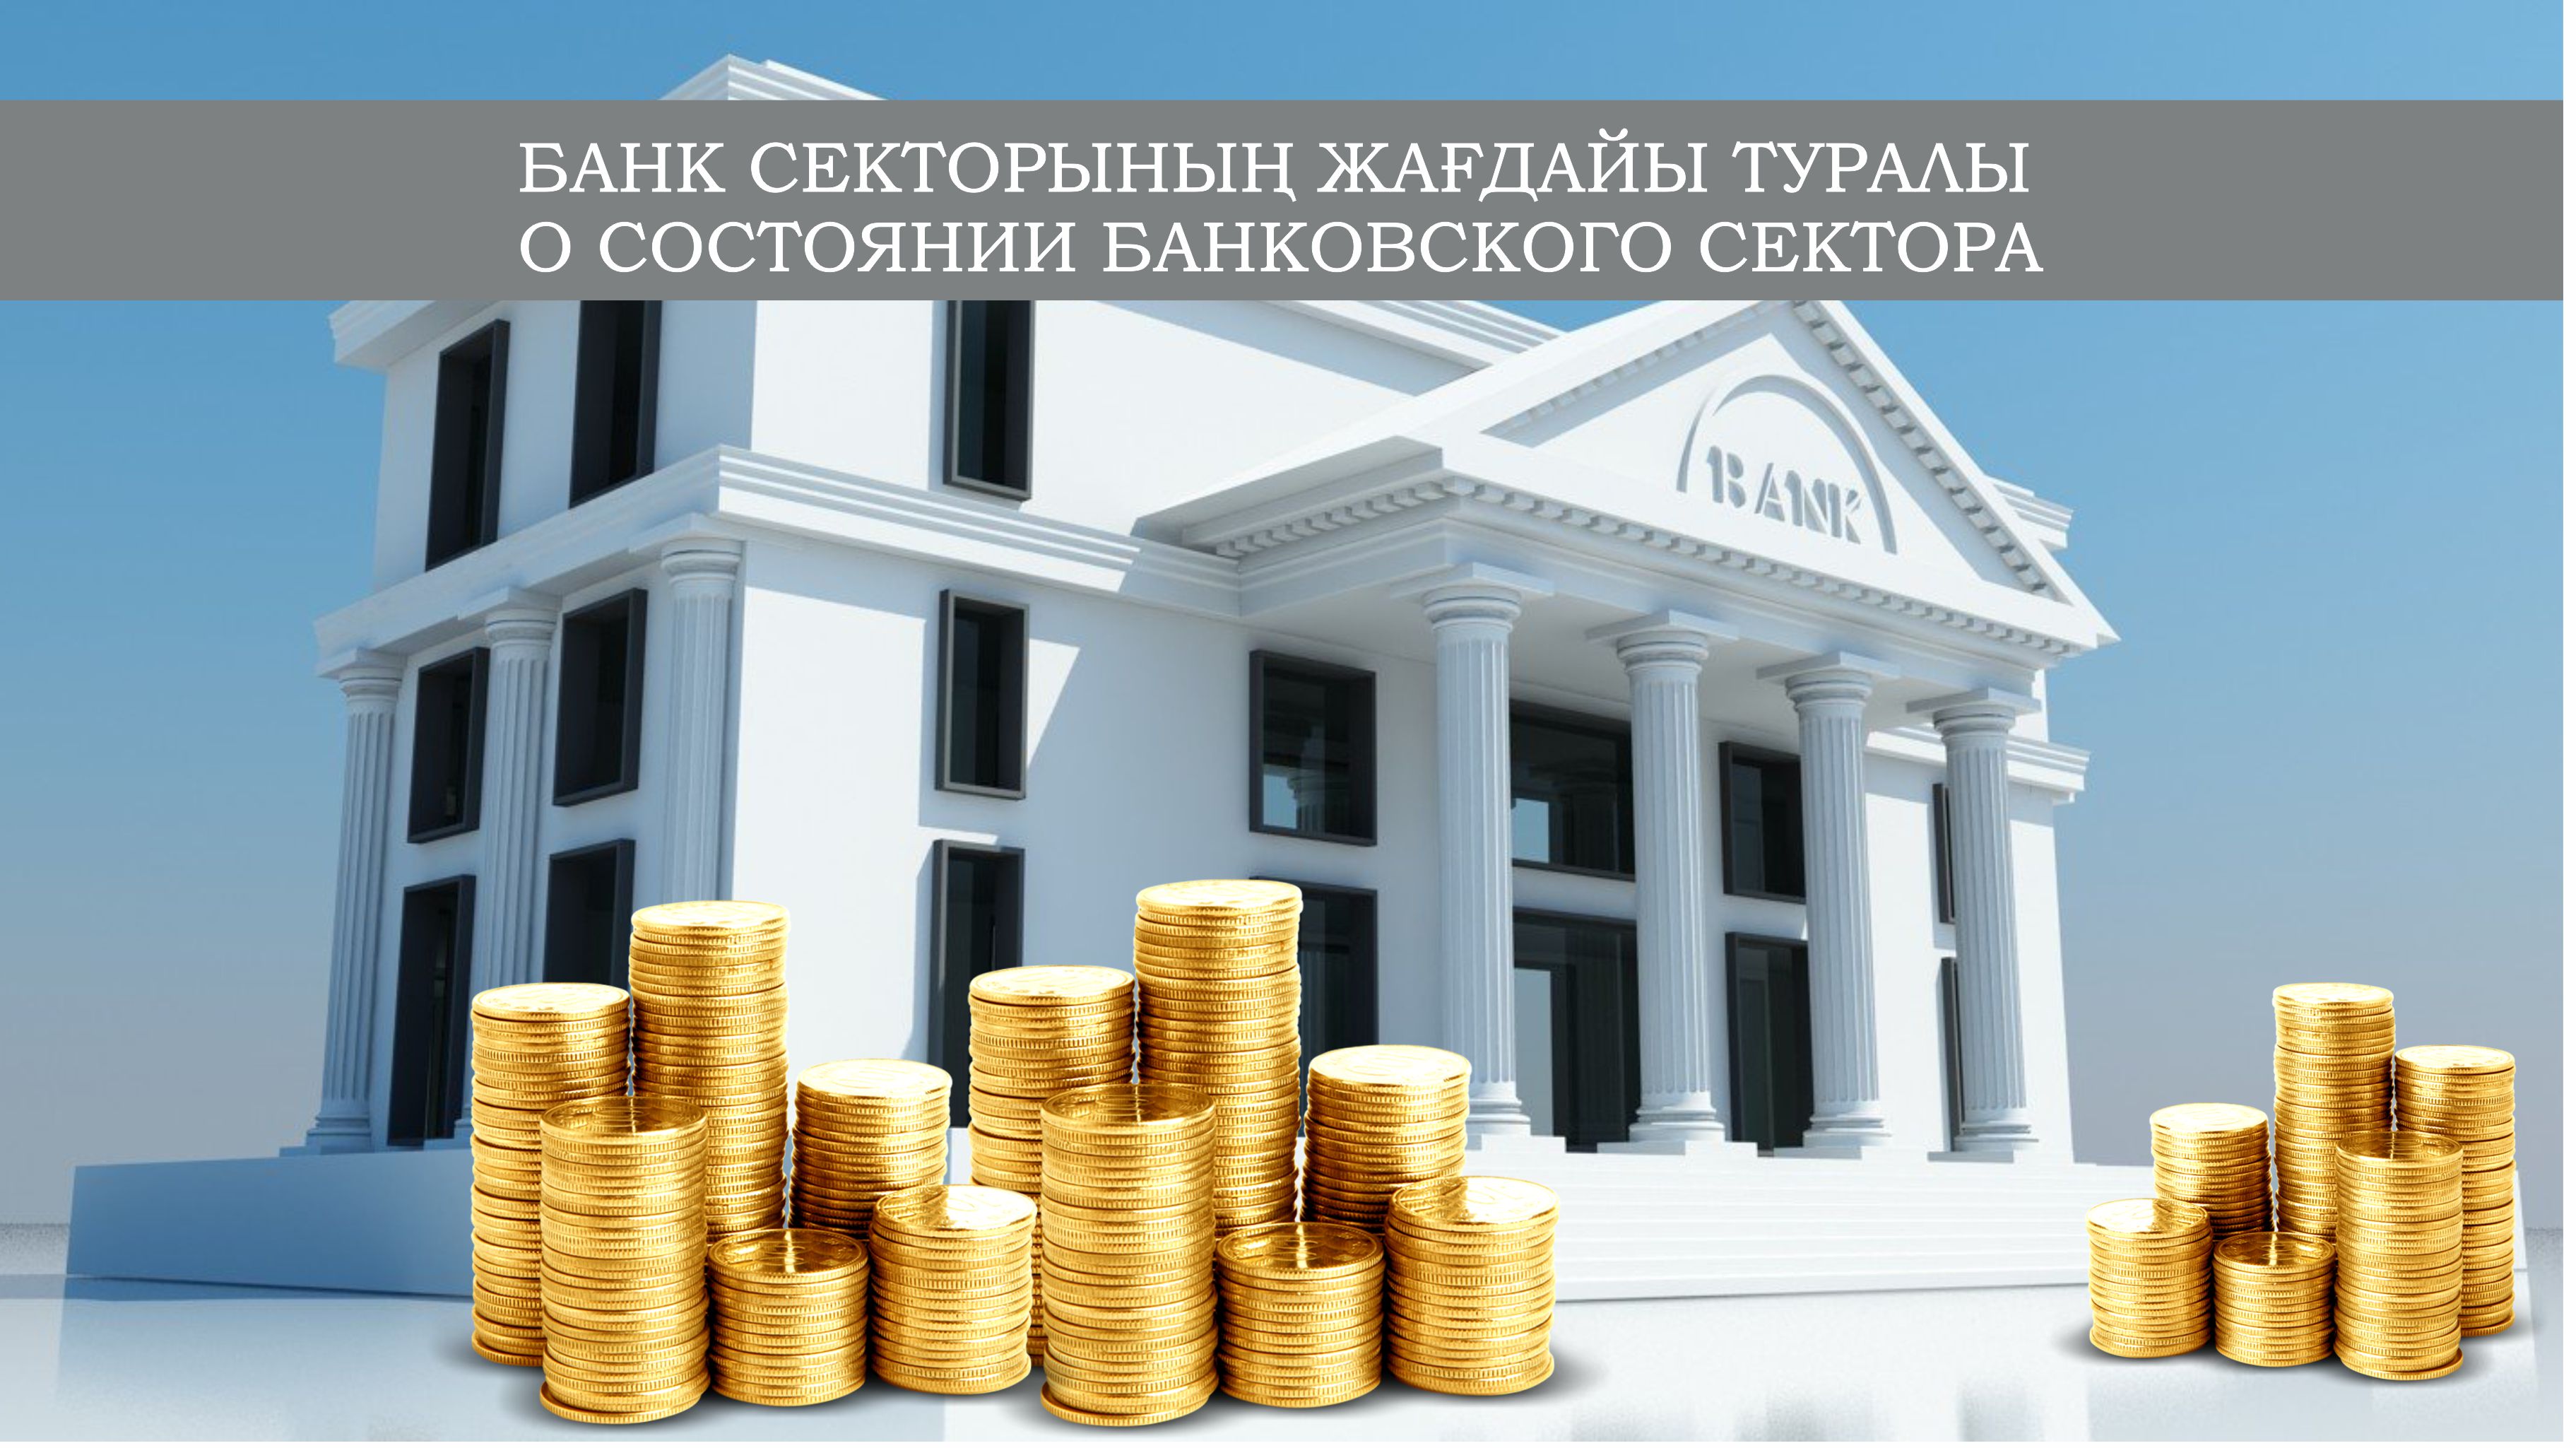 О состоянии банковского сектора Казахстана  на 1 апреля 2022 года